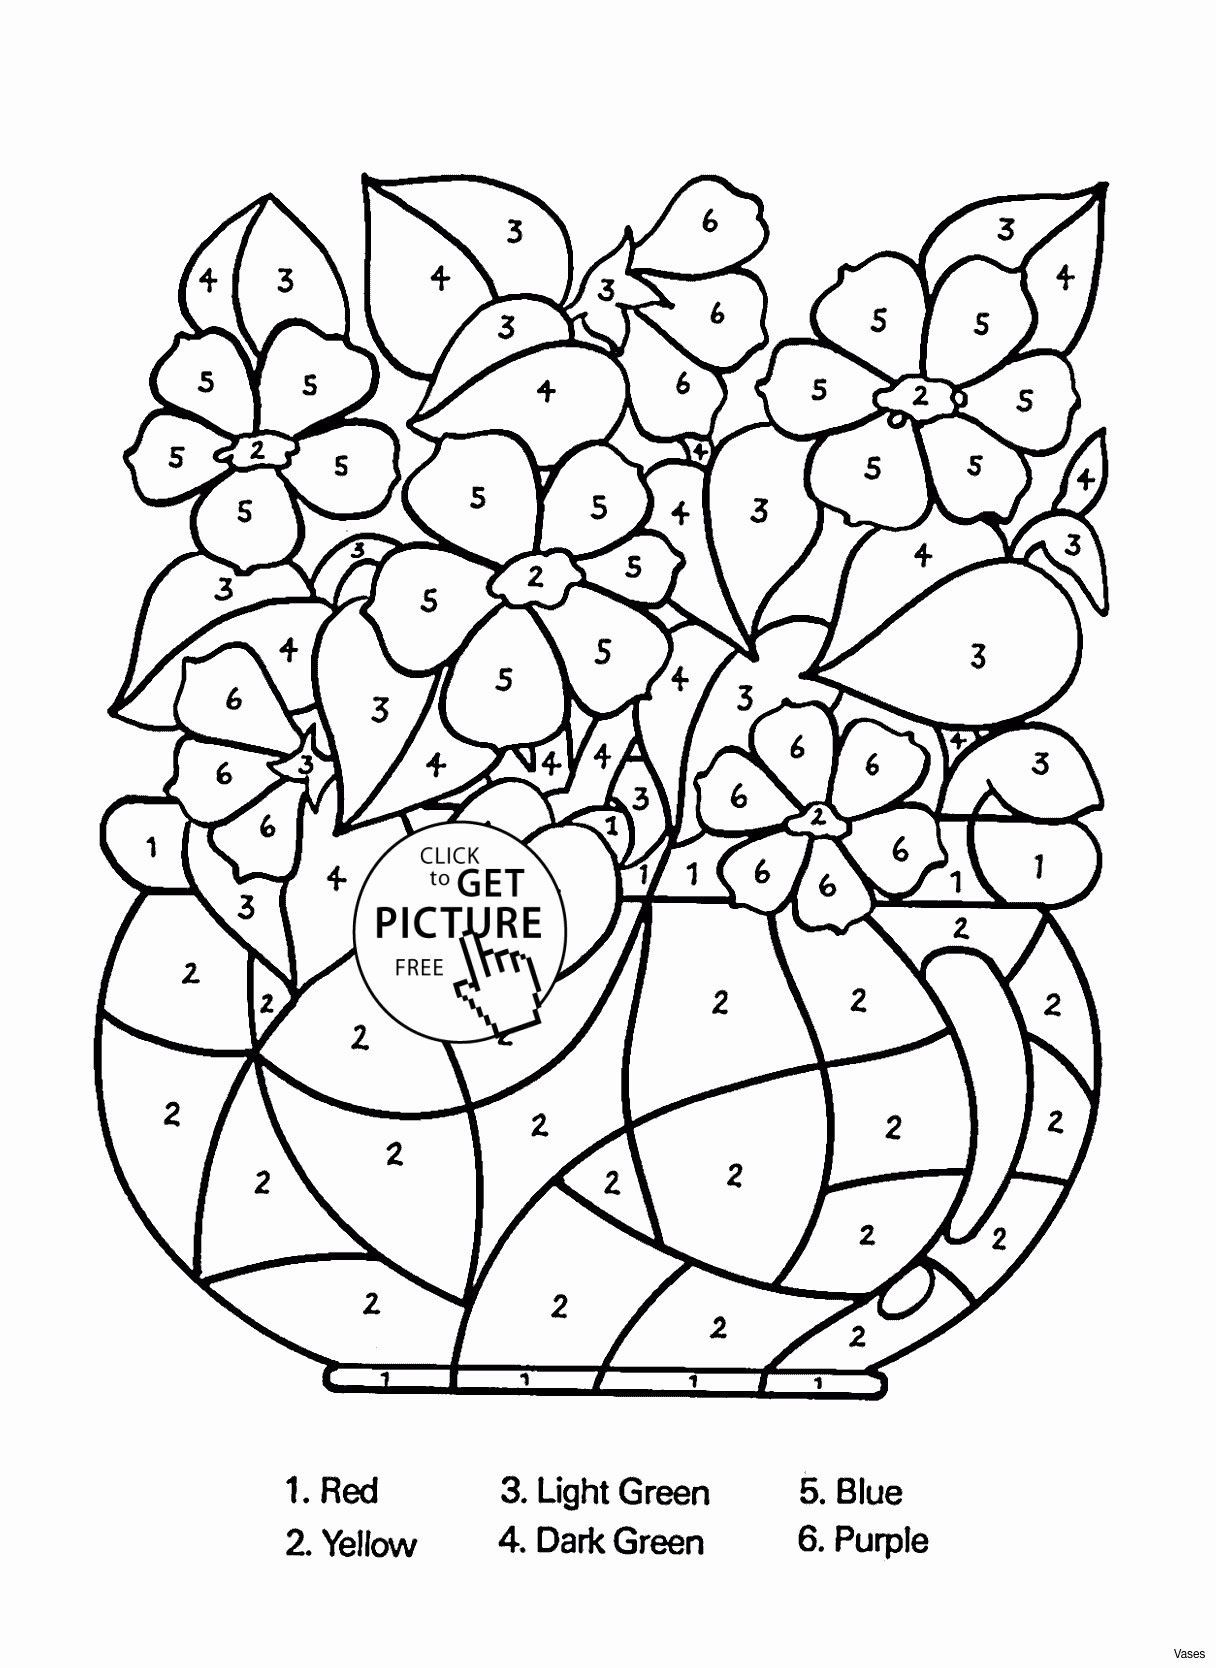 tulip vase arrangements of iphone wallpaper yellow flowers inspirational vases flower vase pertaining to iphone wallpaper yellow flowers inspirational vases flower vase coloring page pages flowers in a top i